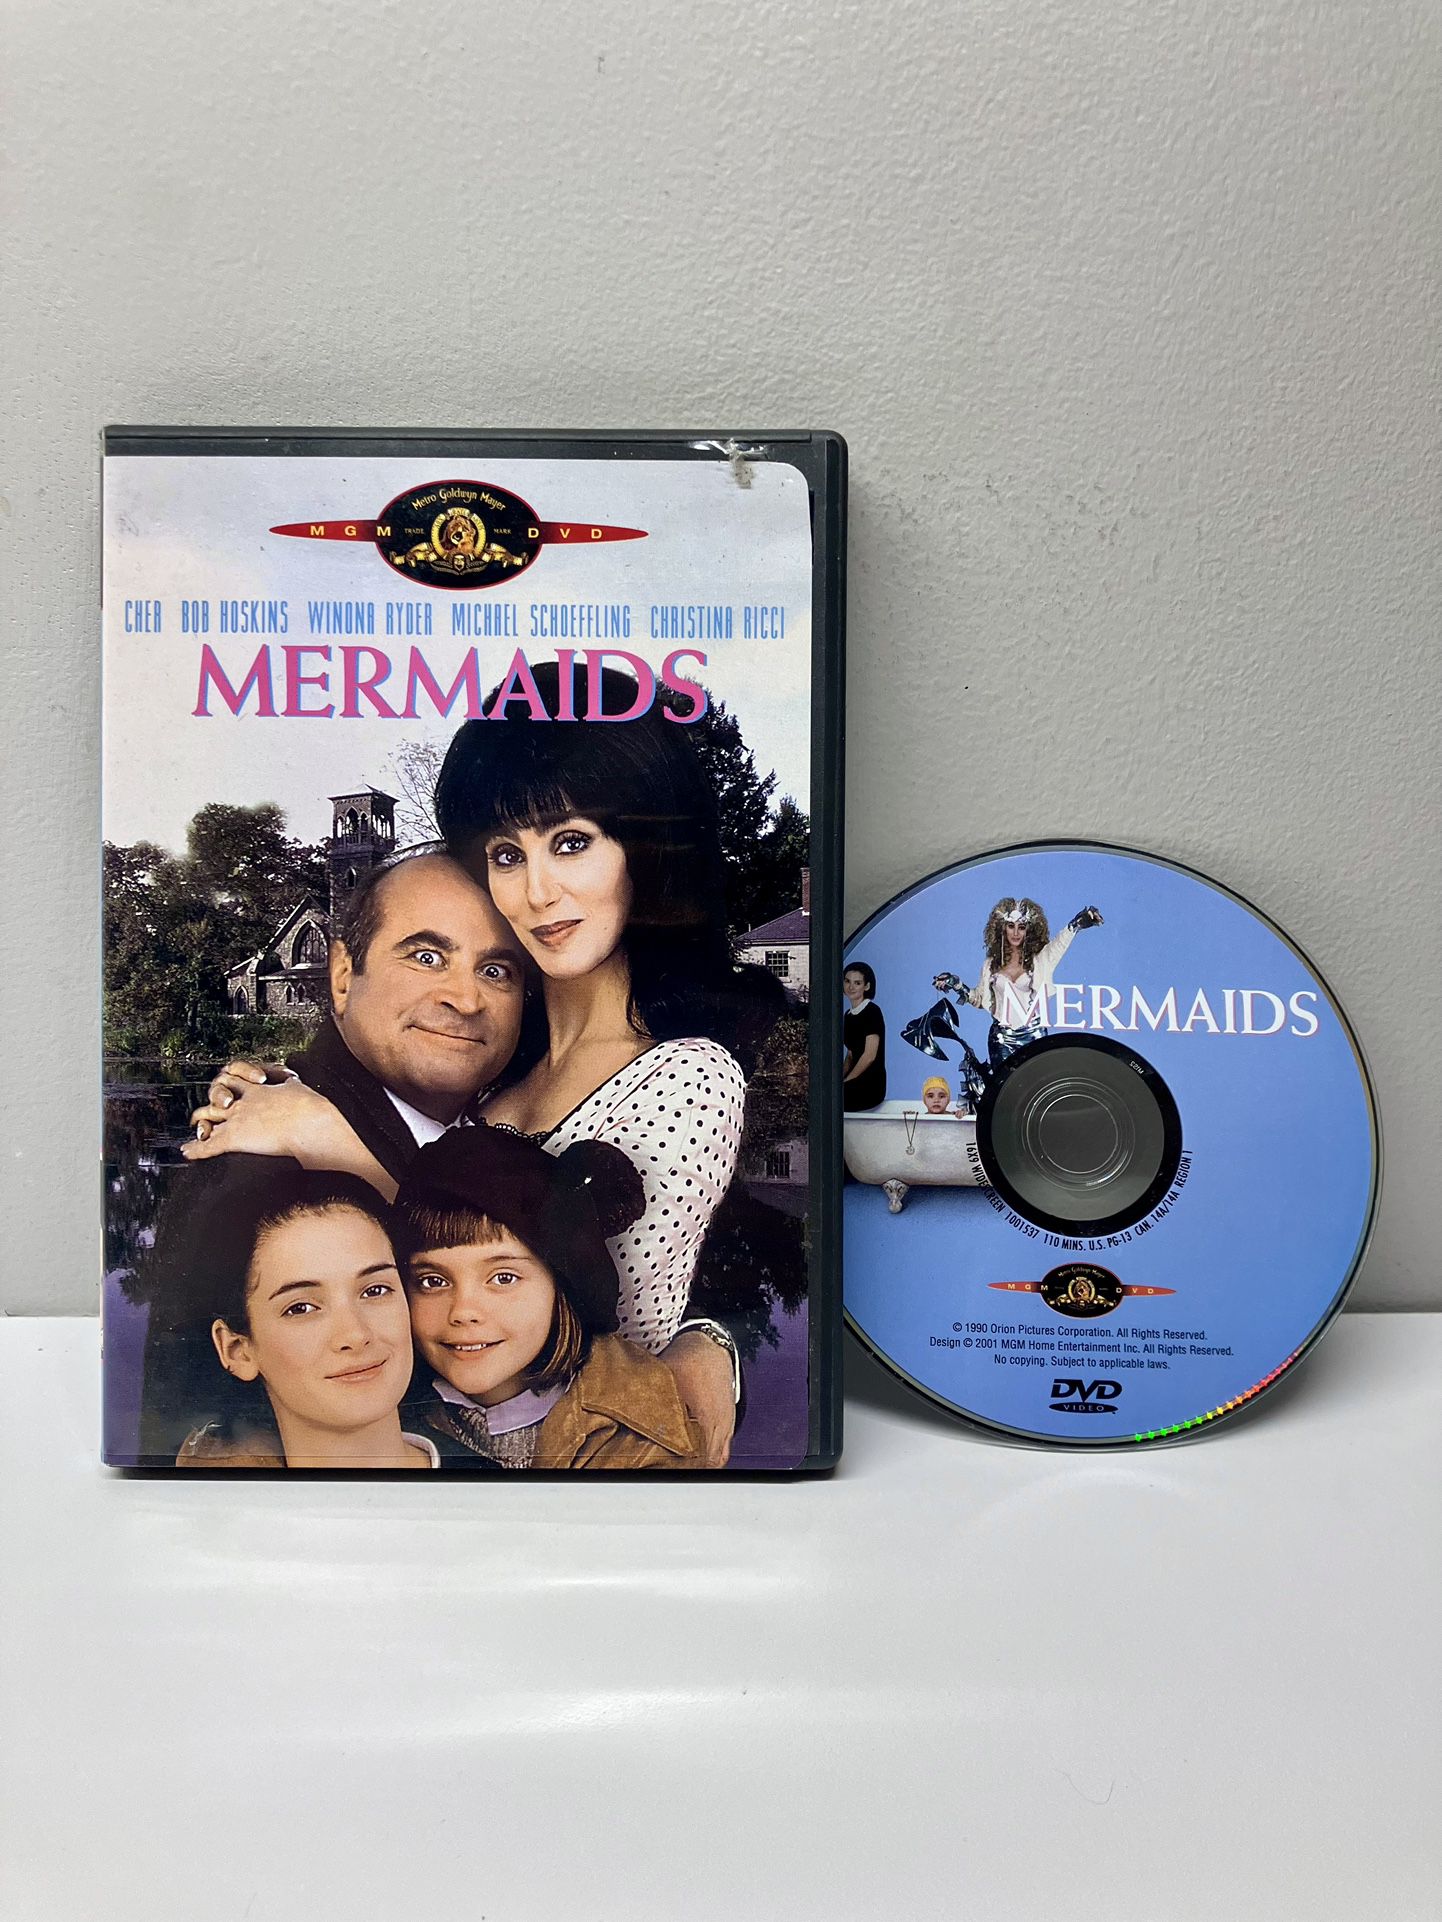 Mermaids Widescreen DVD Starring Cher - Excellent Condition 